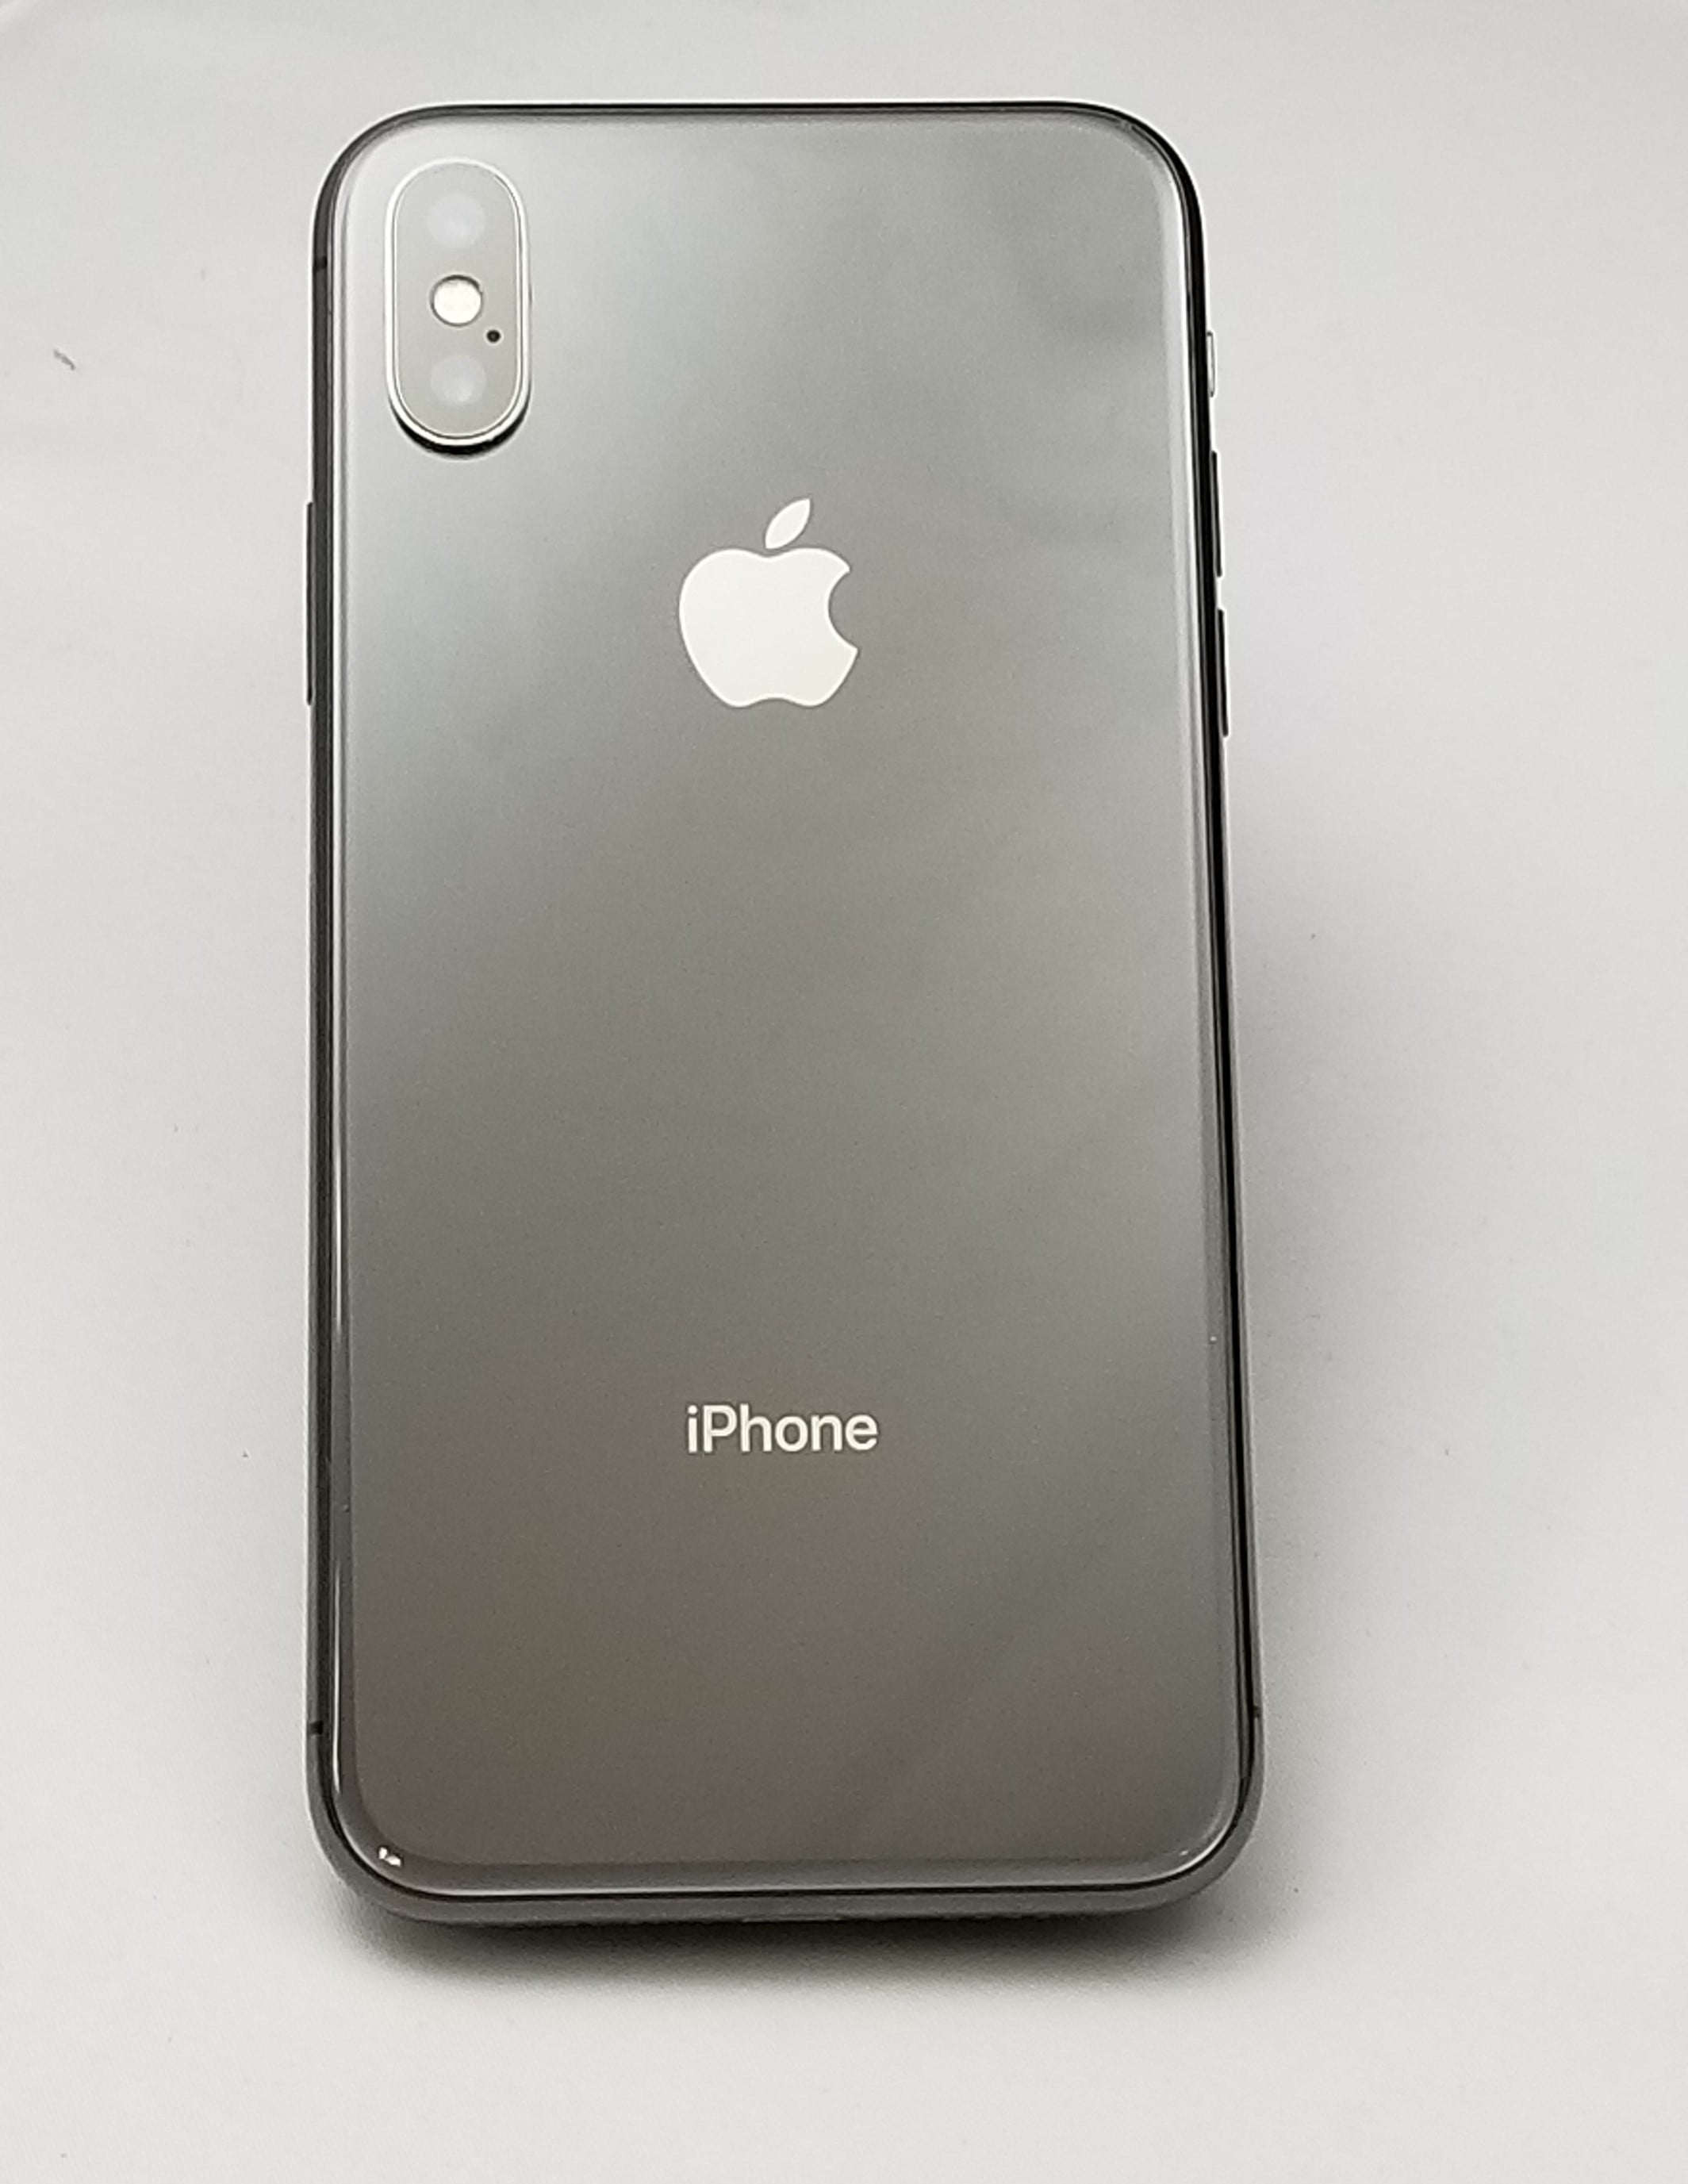 Apple iPhone X Unlocked 64GB Space Gray (Grade C) - A1865 (Used)